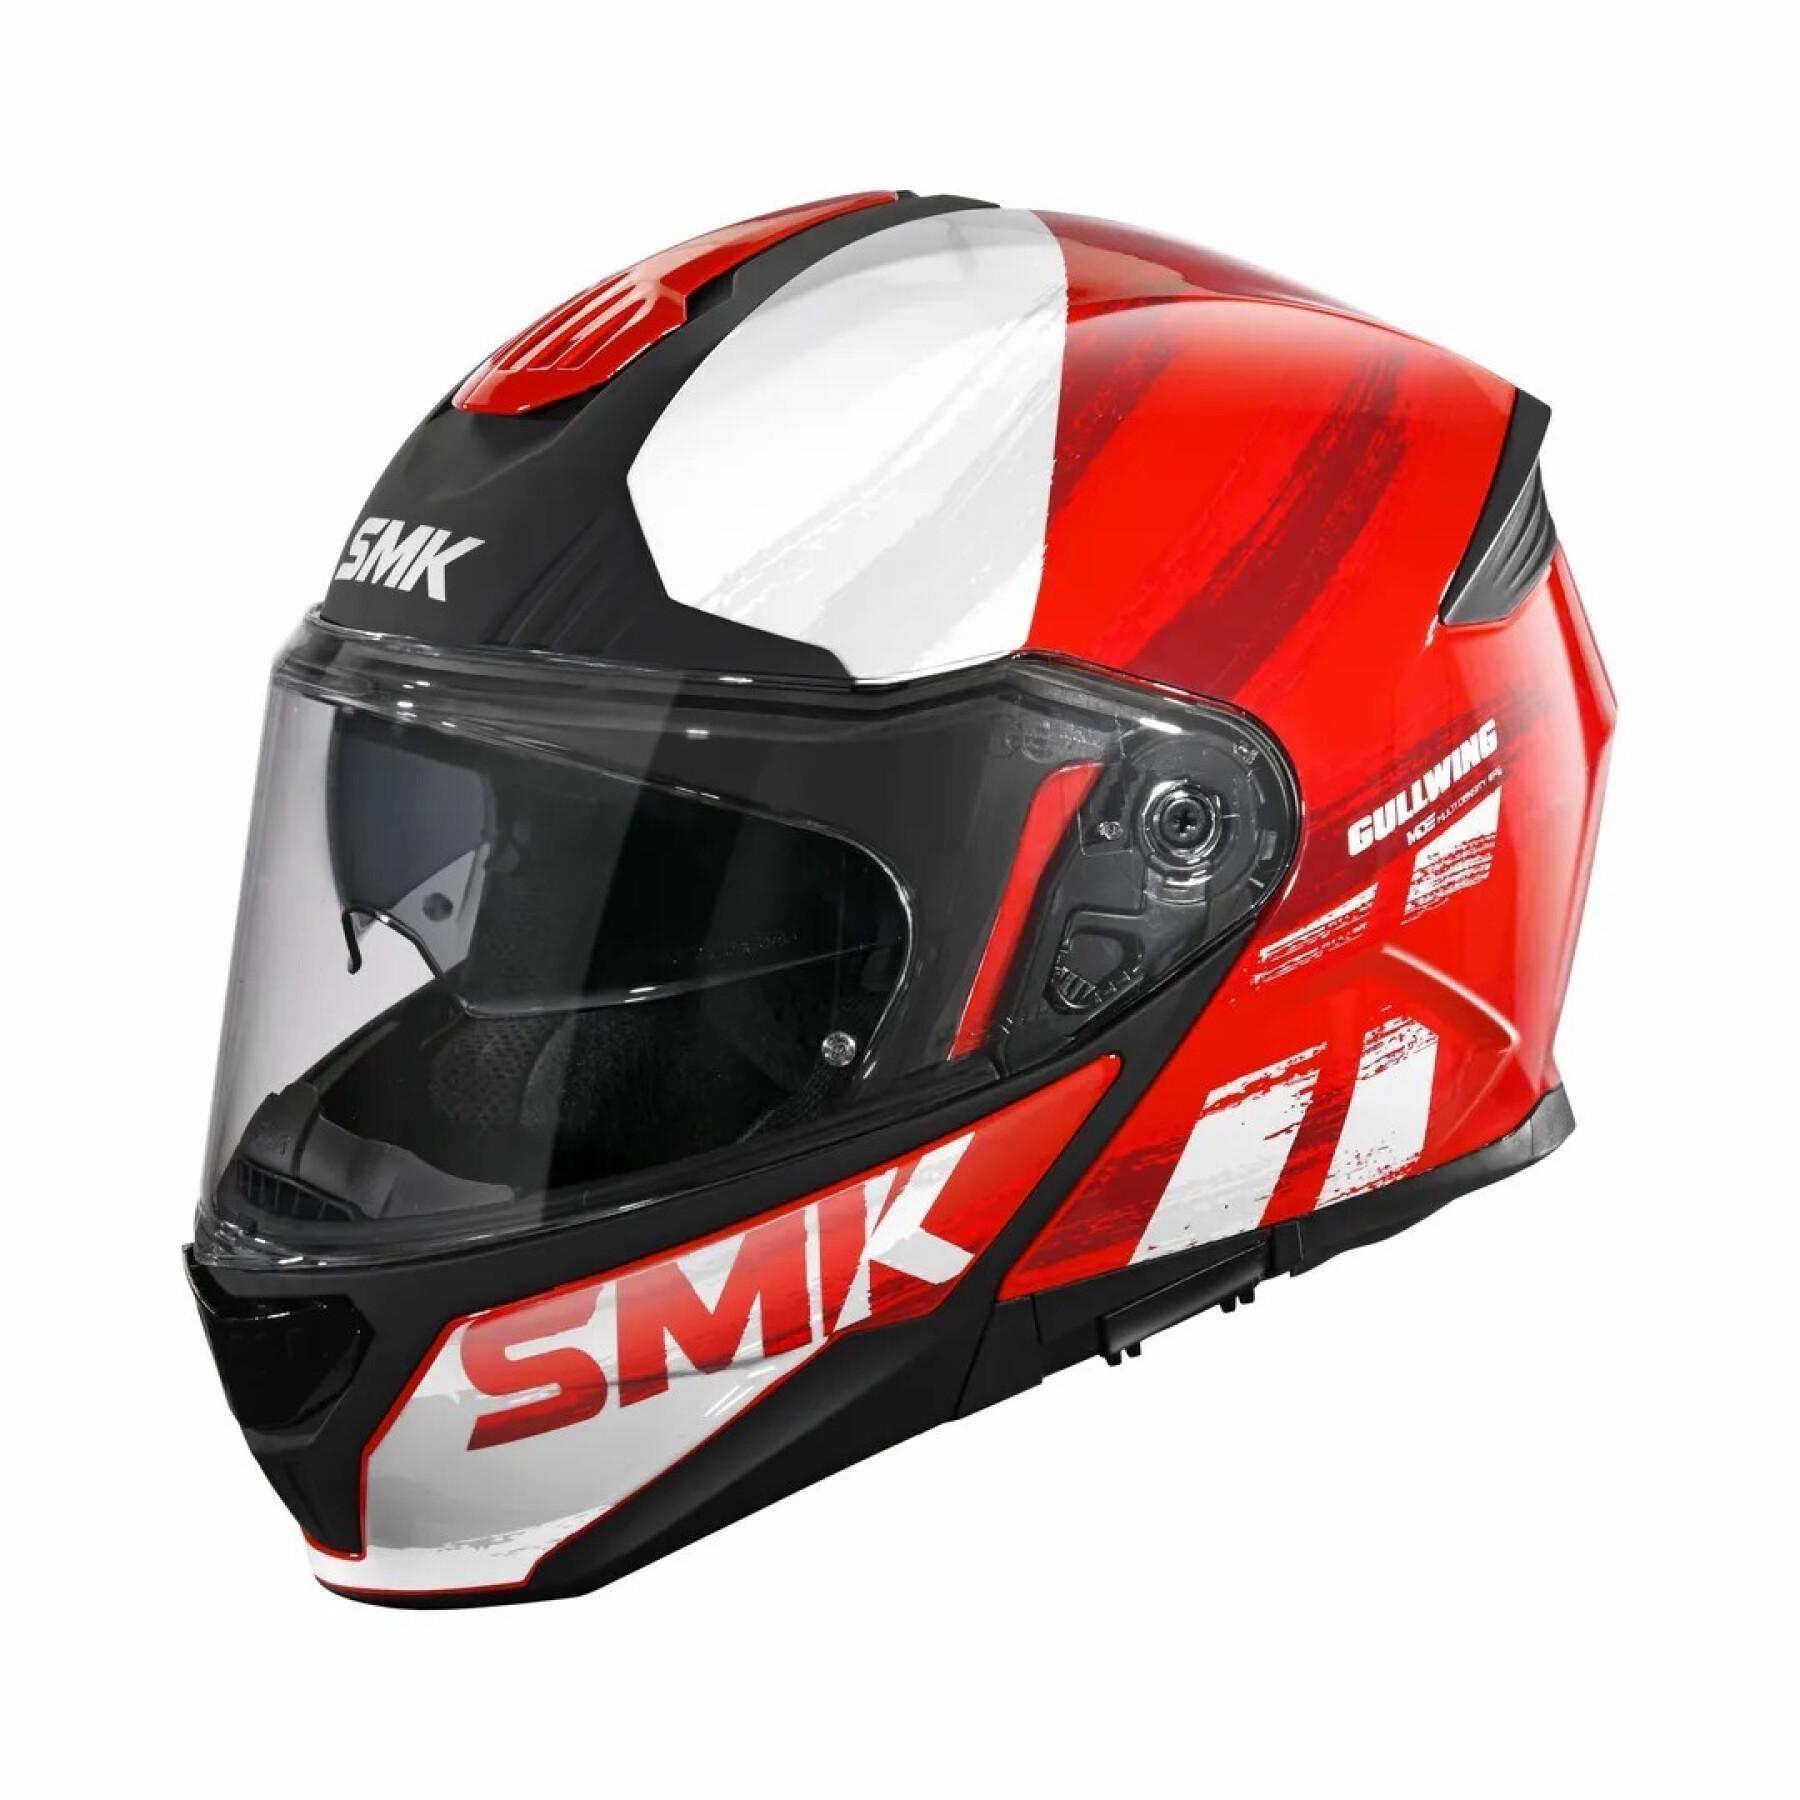 Full face motorcycle helmet SMK Gullwing Tourleader